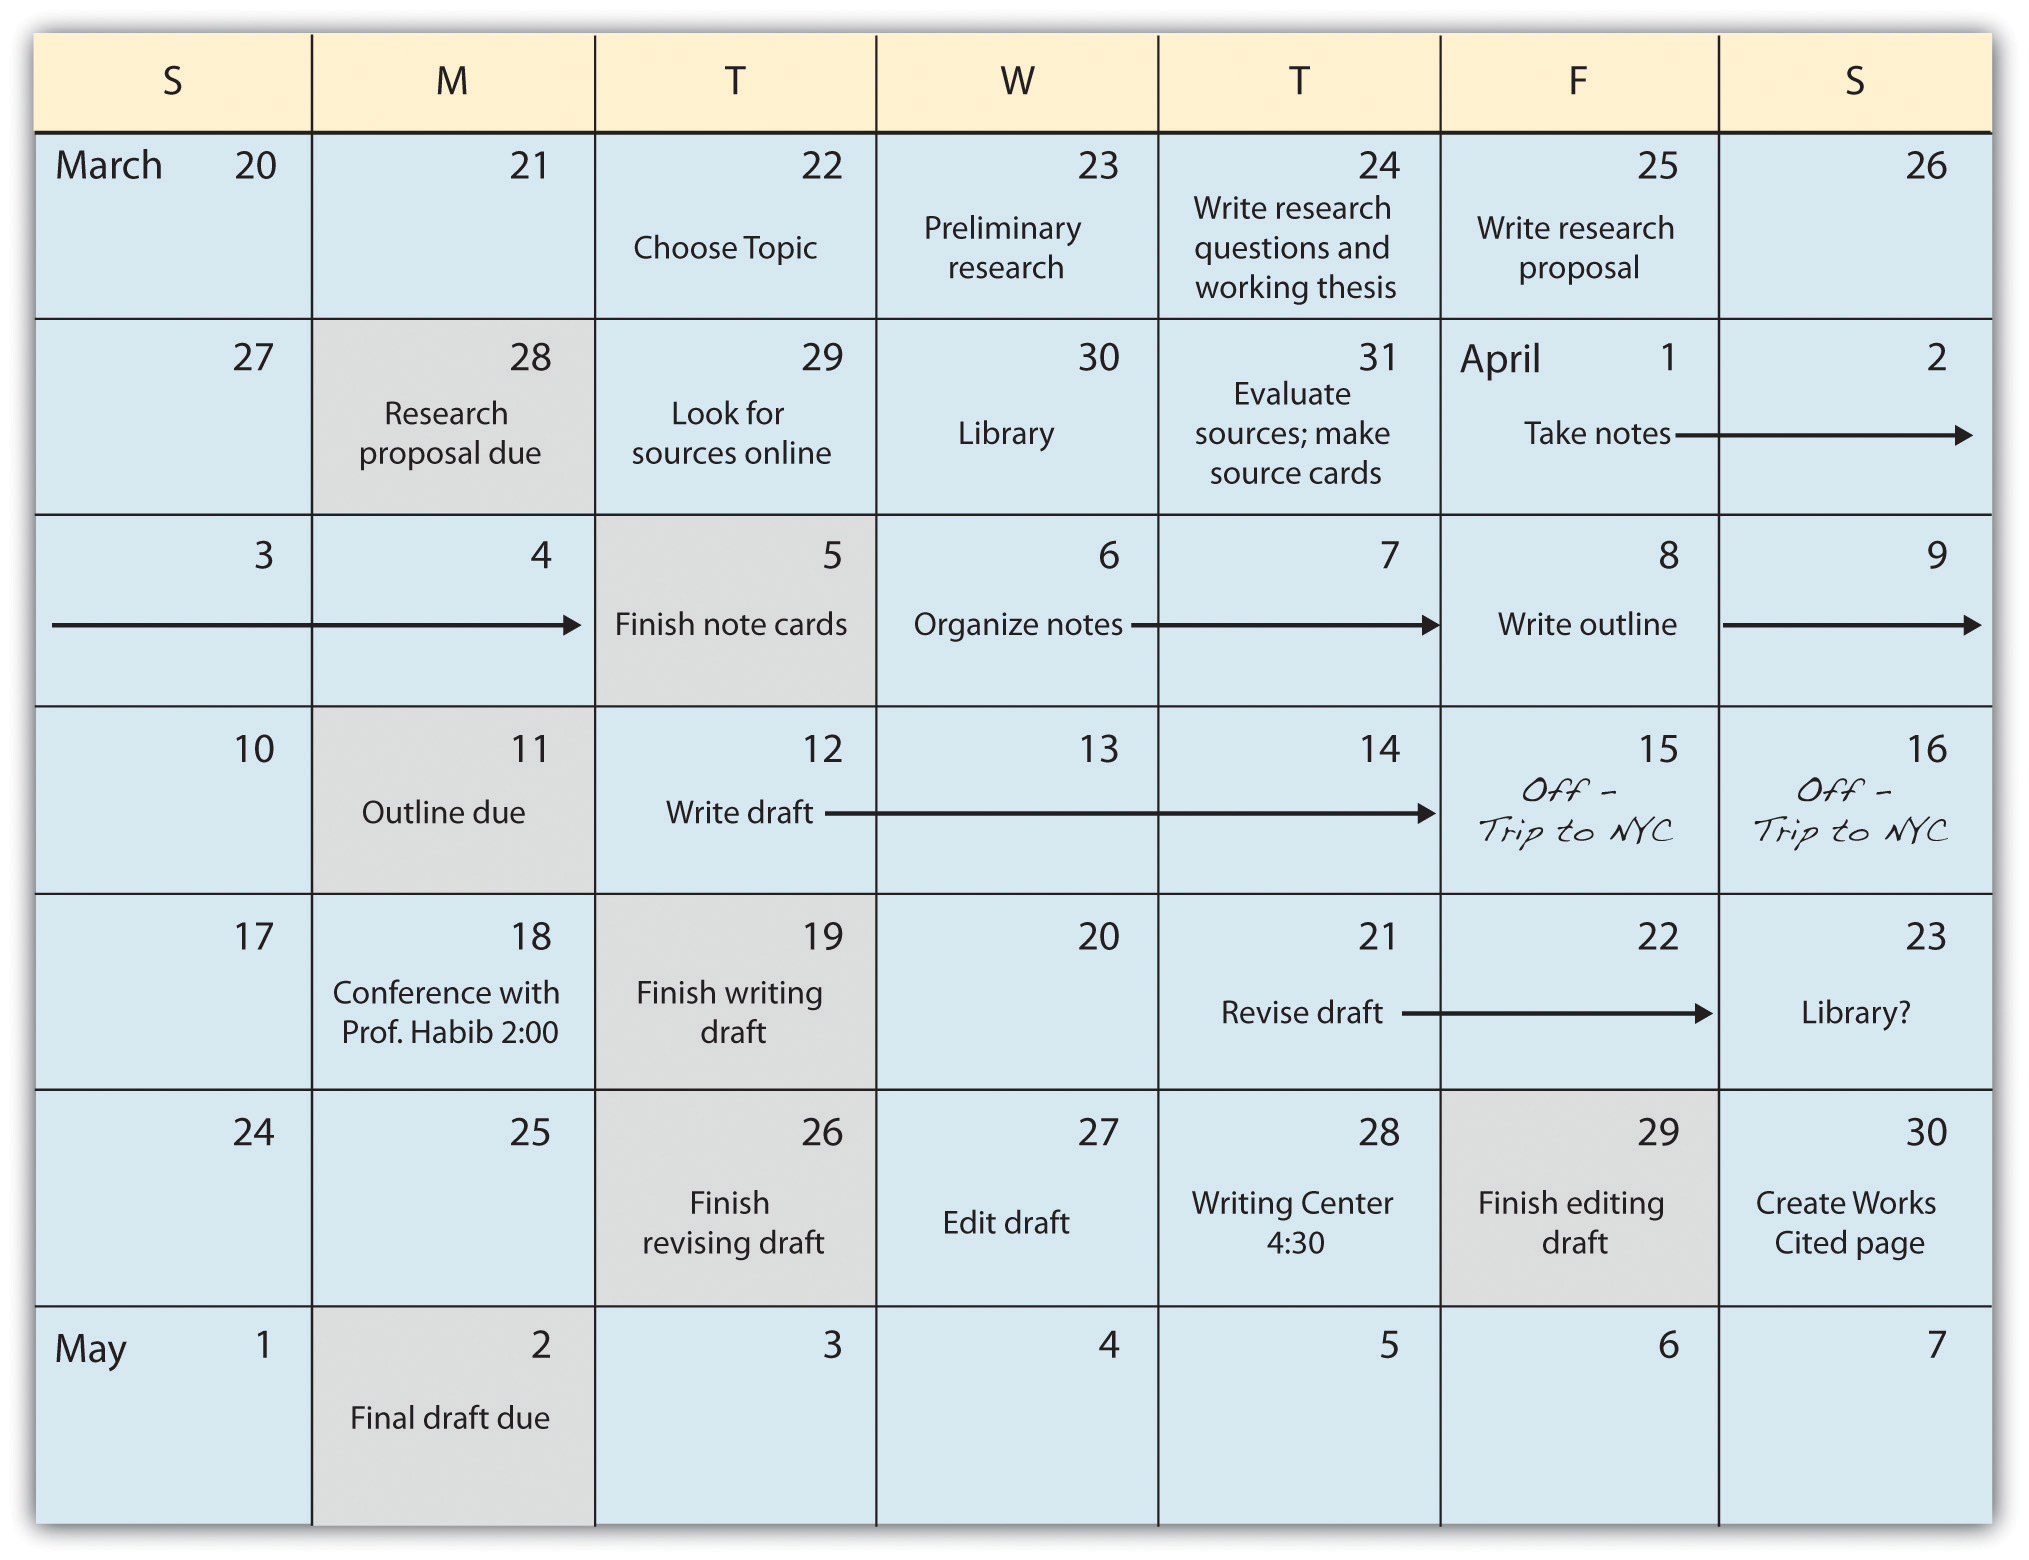 A calendar showing a calandar with tasks of different days. Longer image description is available.